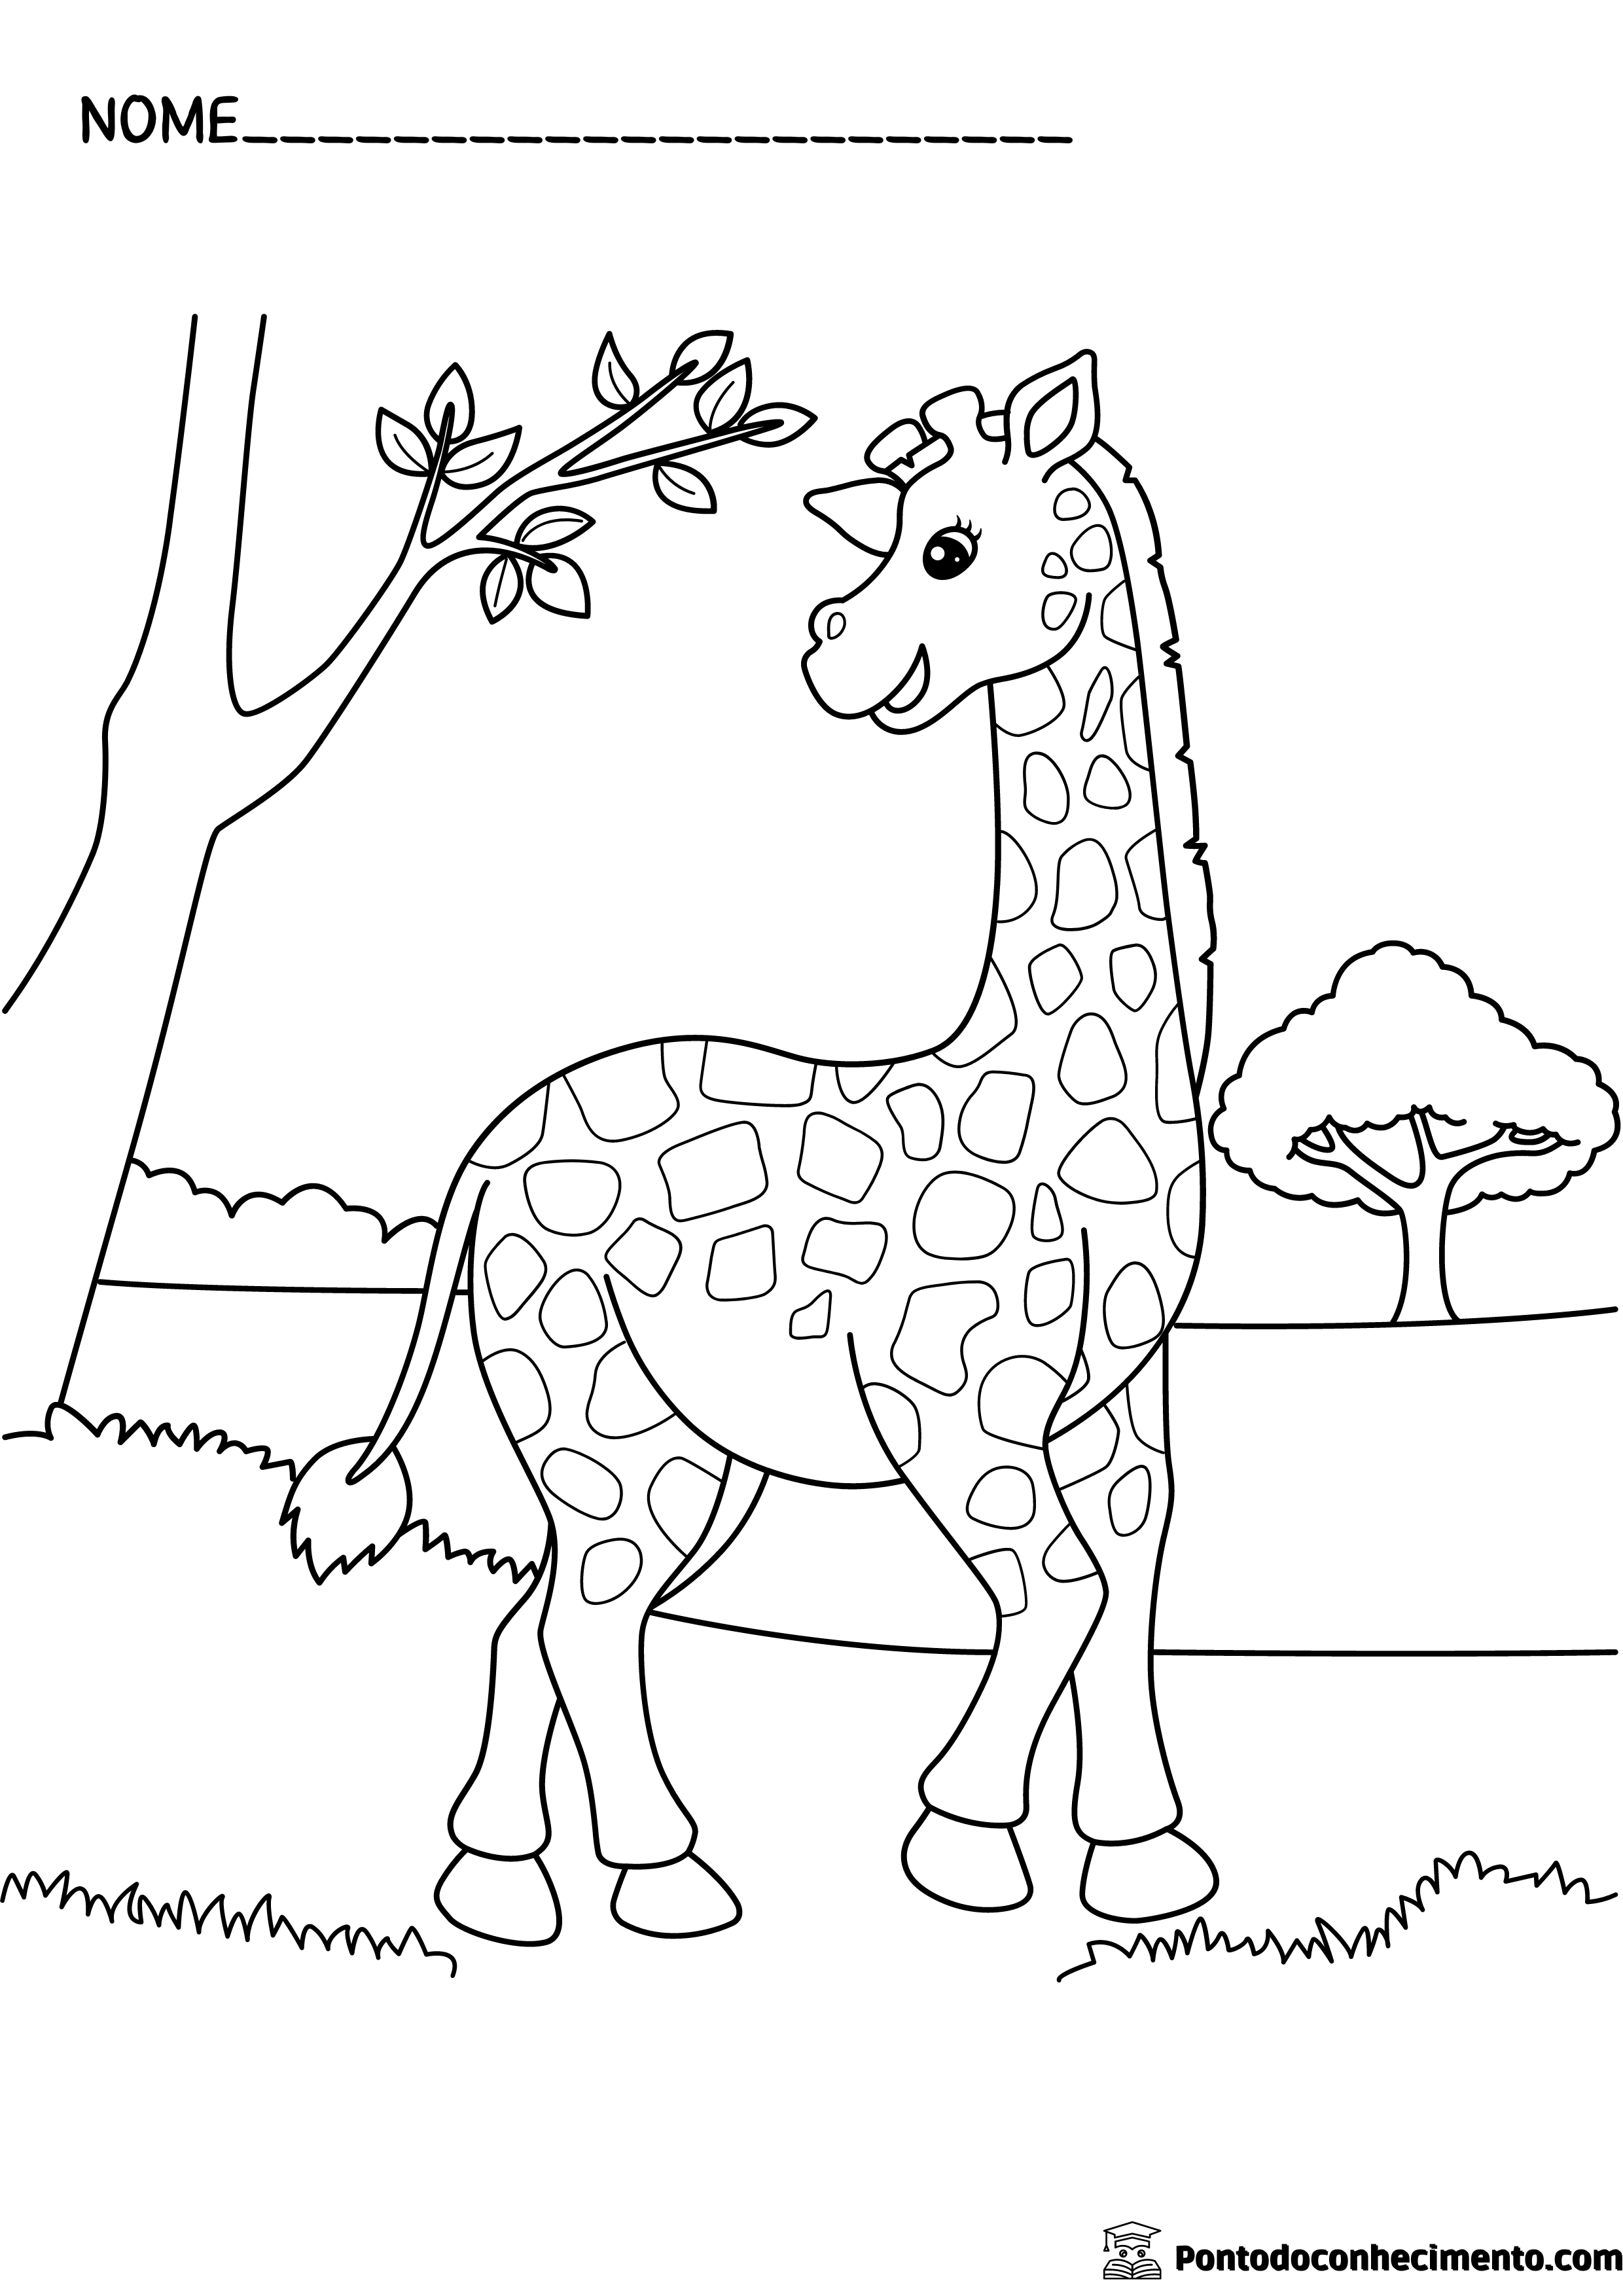 Desenhos infantis para colorir: girafa